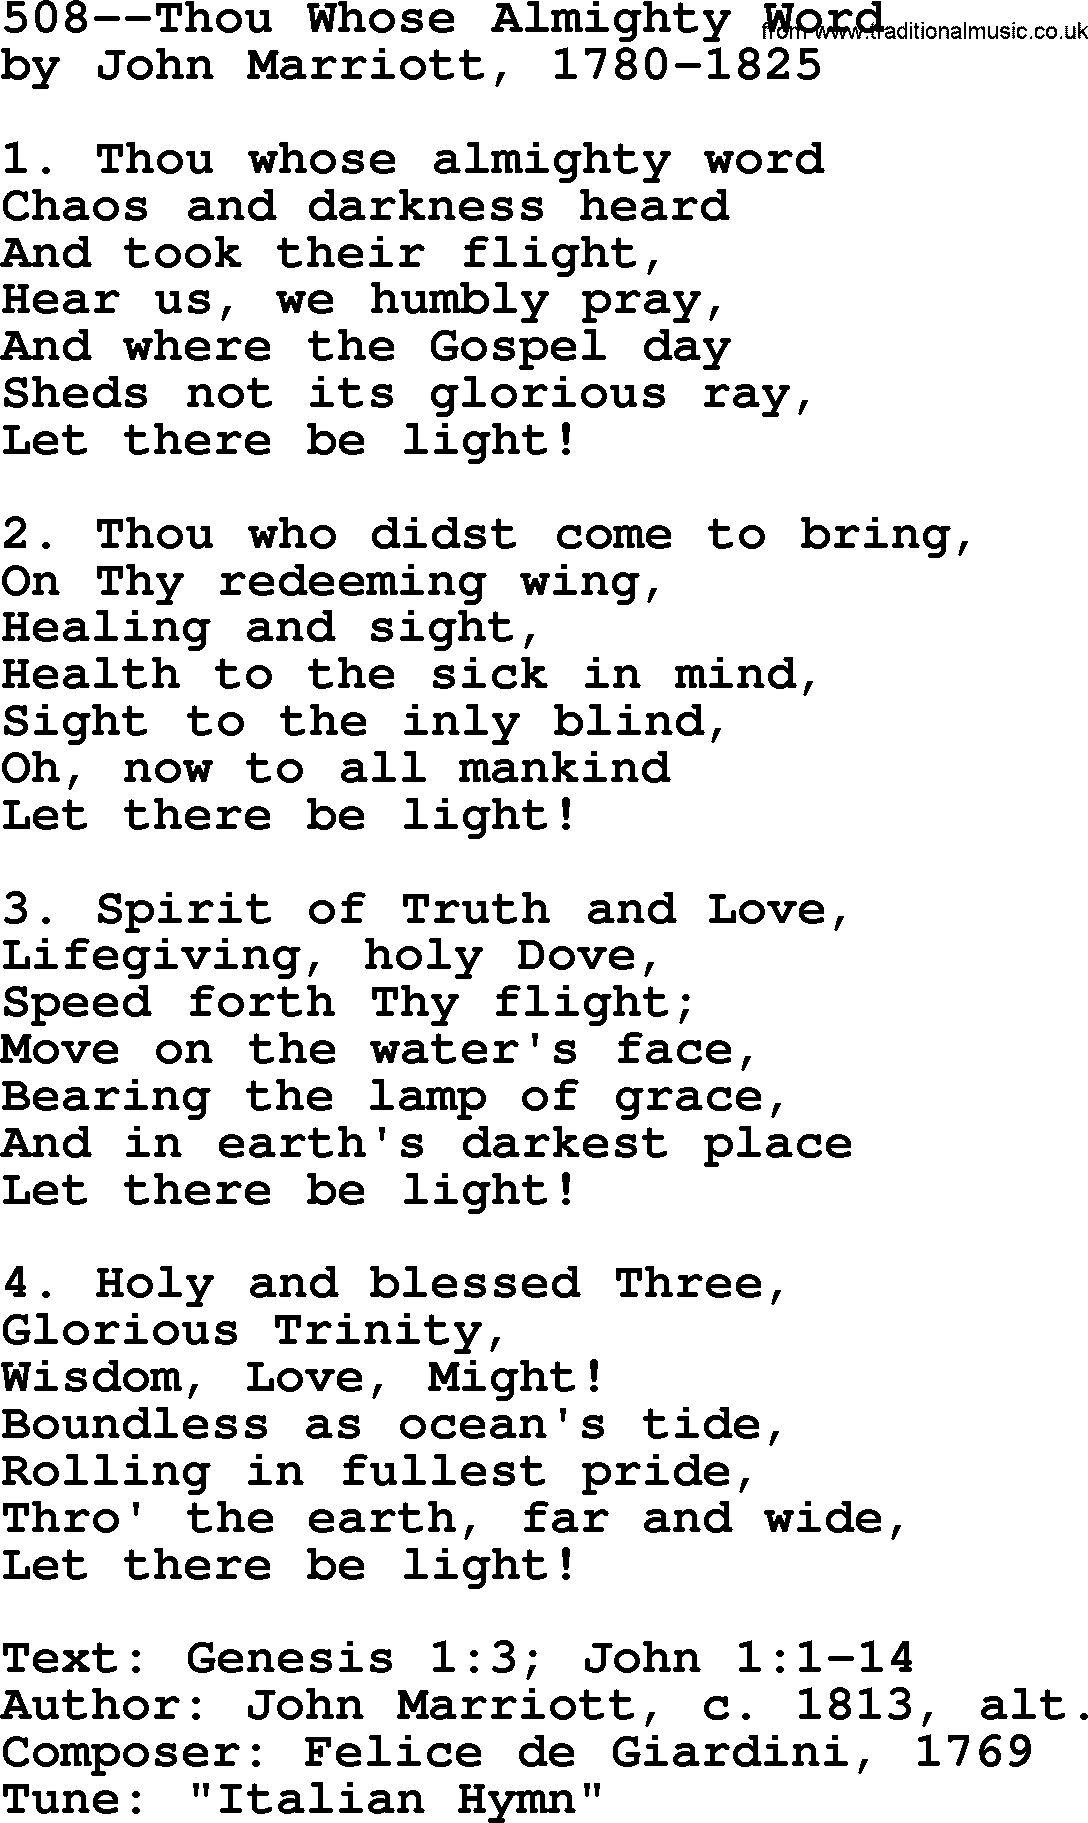 Lutheran Hymn: 508--Thou Whose Almighty Word.txt lyrics with PDF